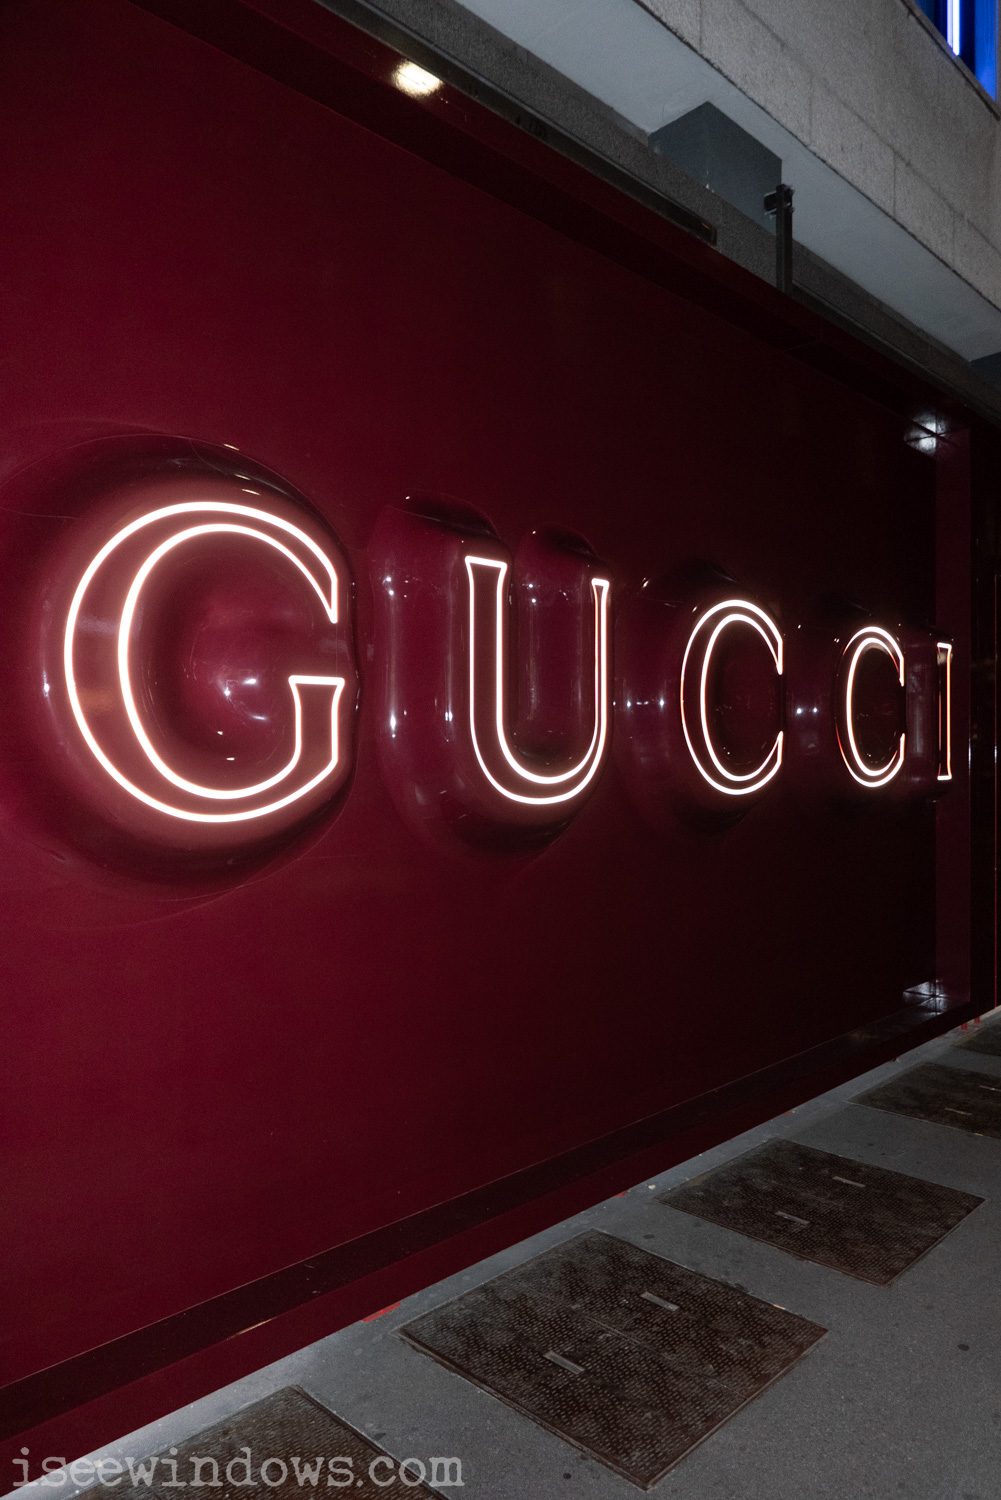 2023/09 Gucci – Ancora (Coming Soon)